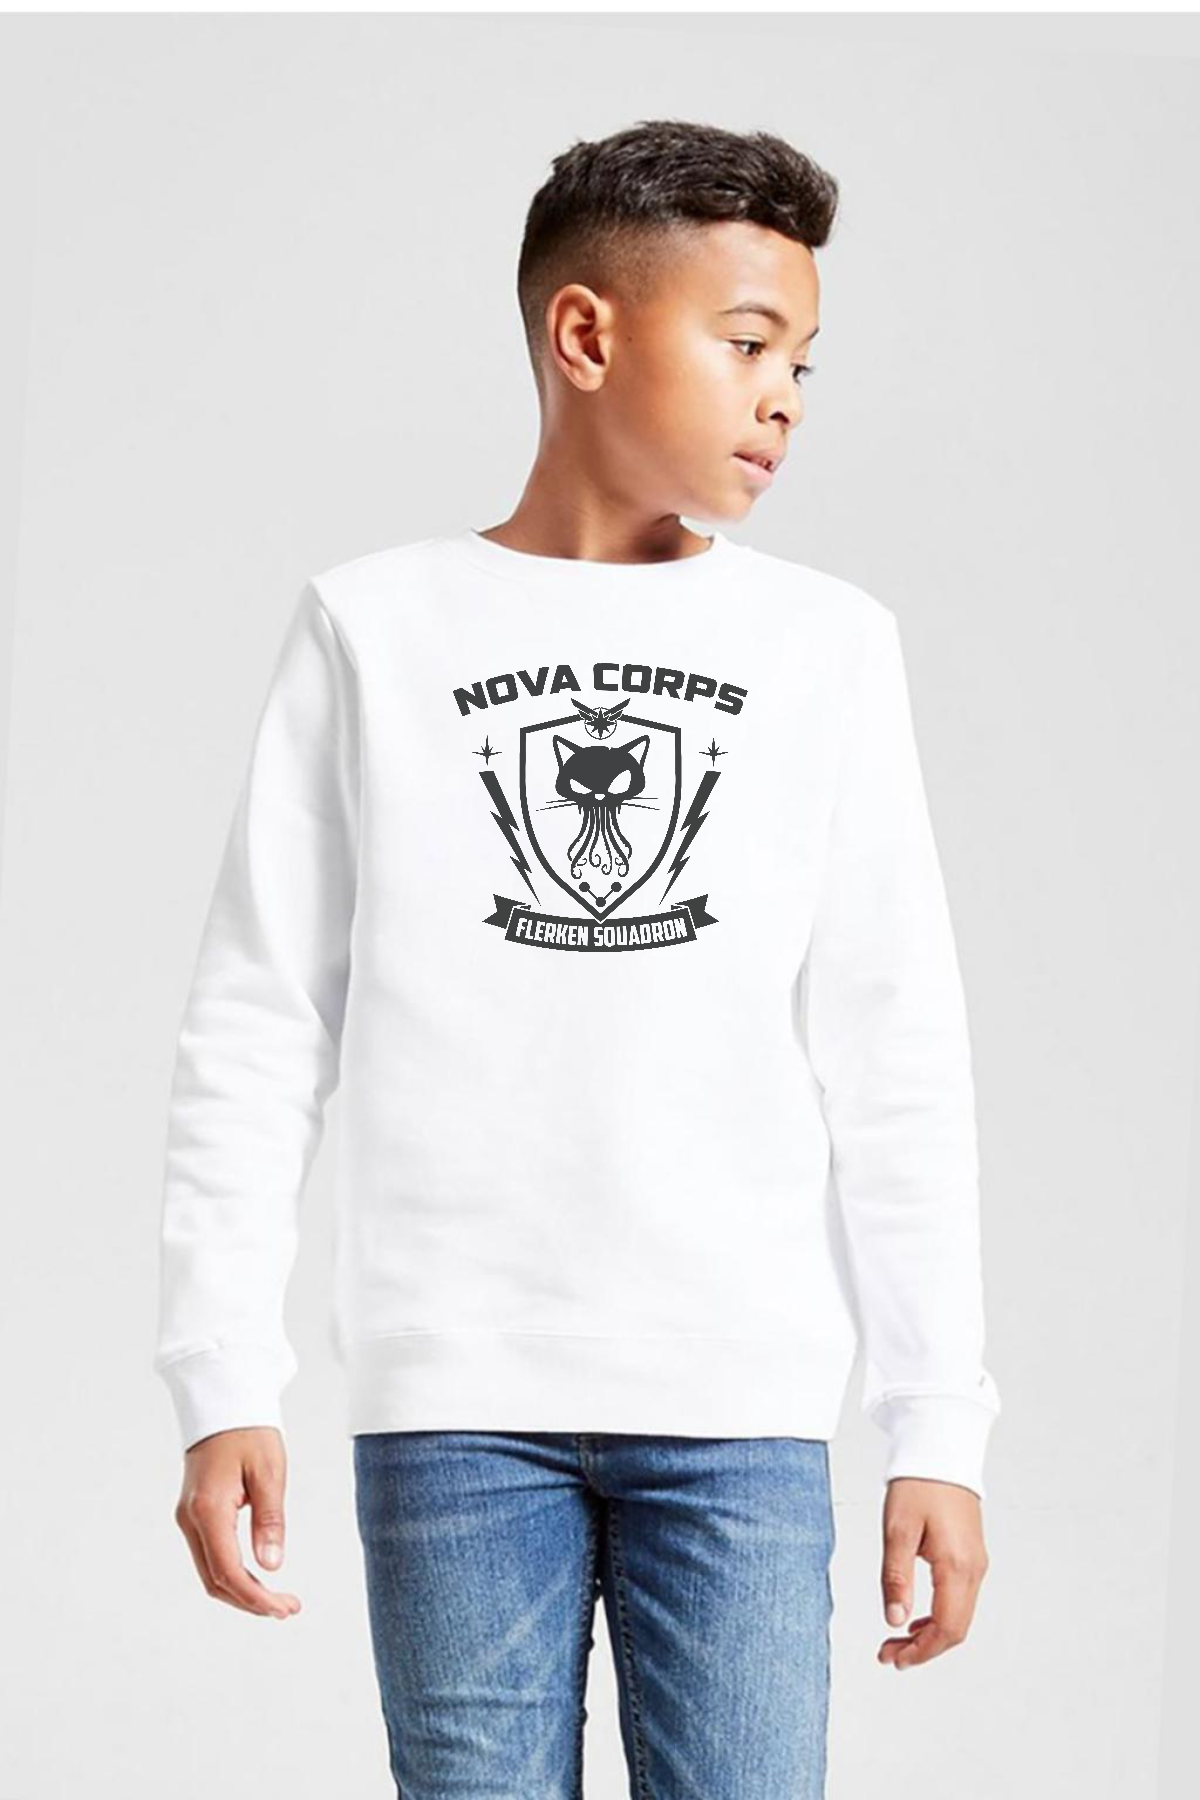 Nova Corps Flerken Squadron Beyaz Çocuk 2ip Sweatshirt